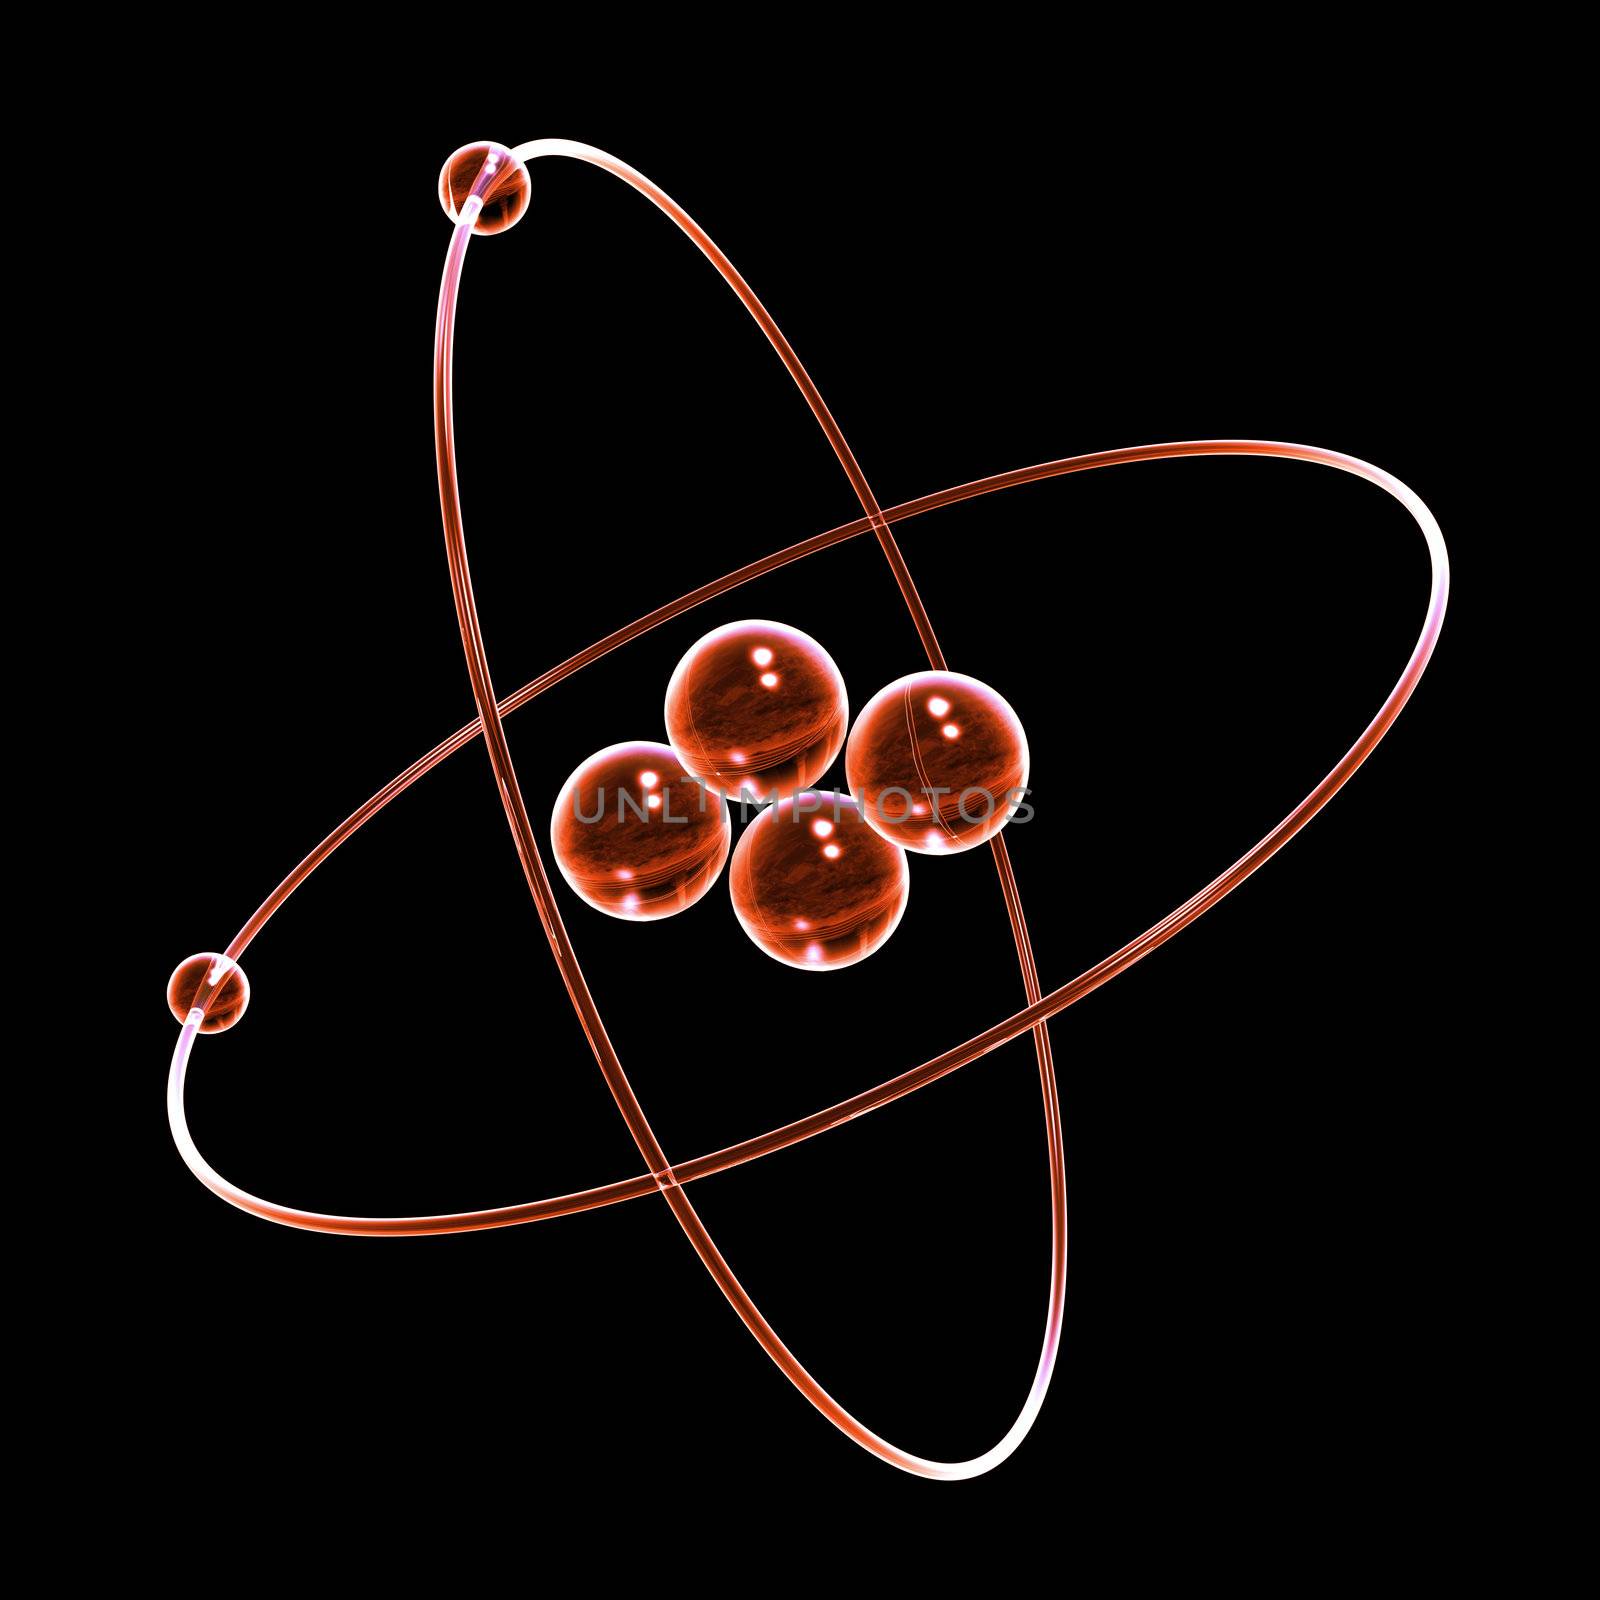 3d made -Helium Atom made of red glass 